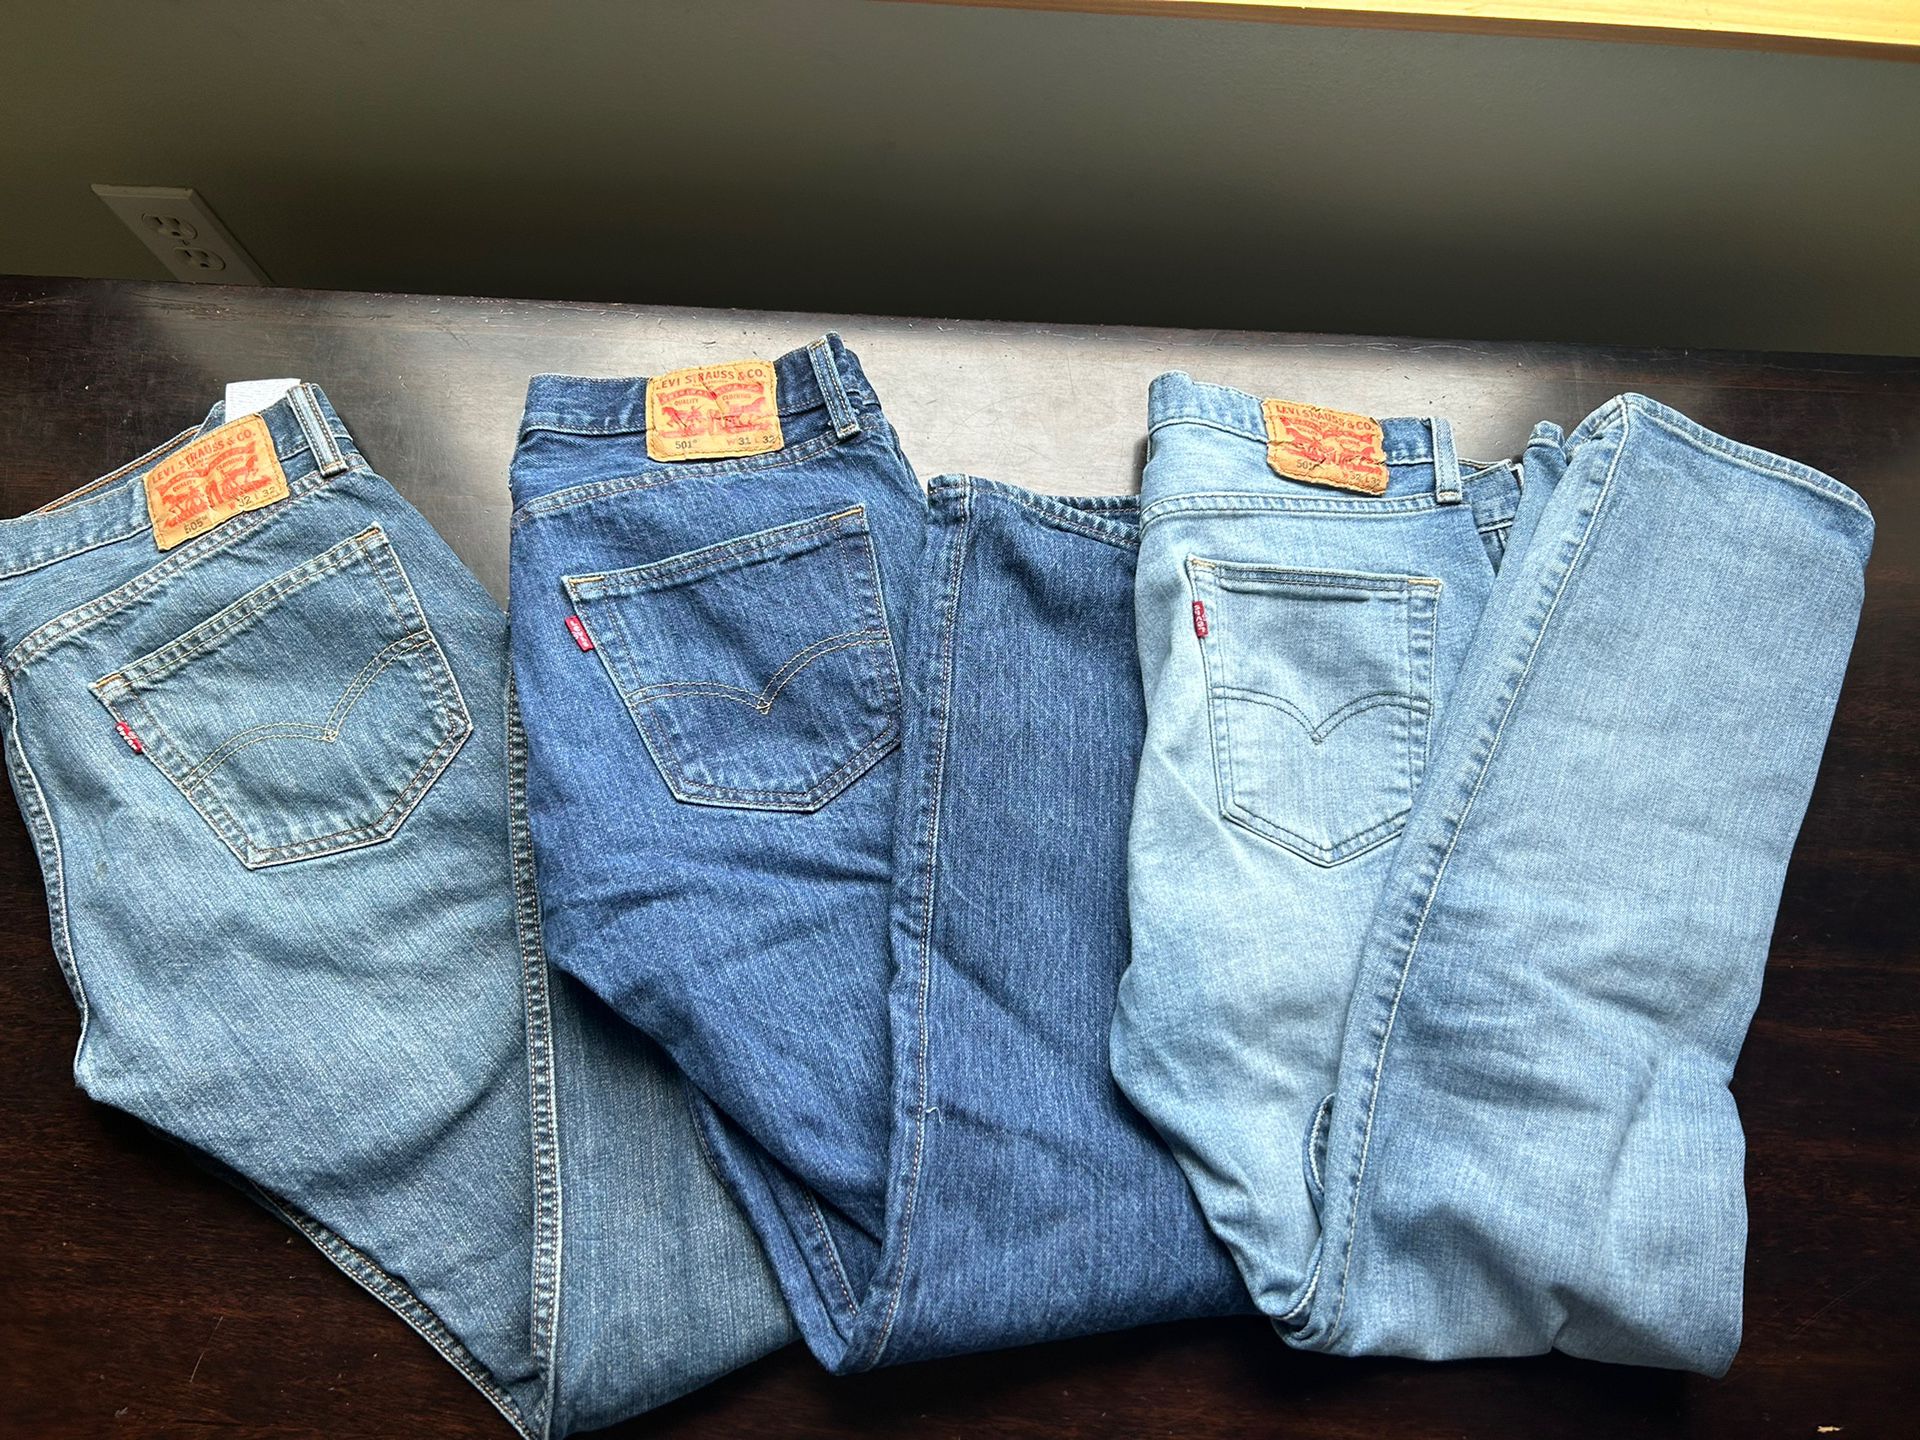 3 Pairs Of 32x32 Men’s Levi’s Jeans